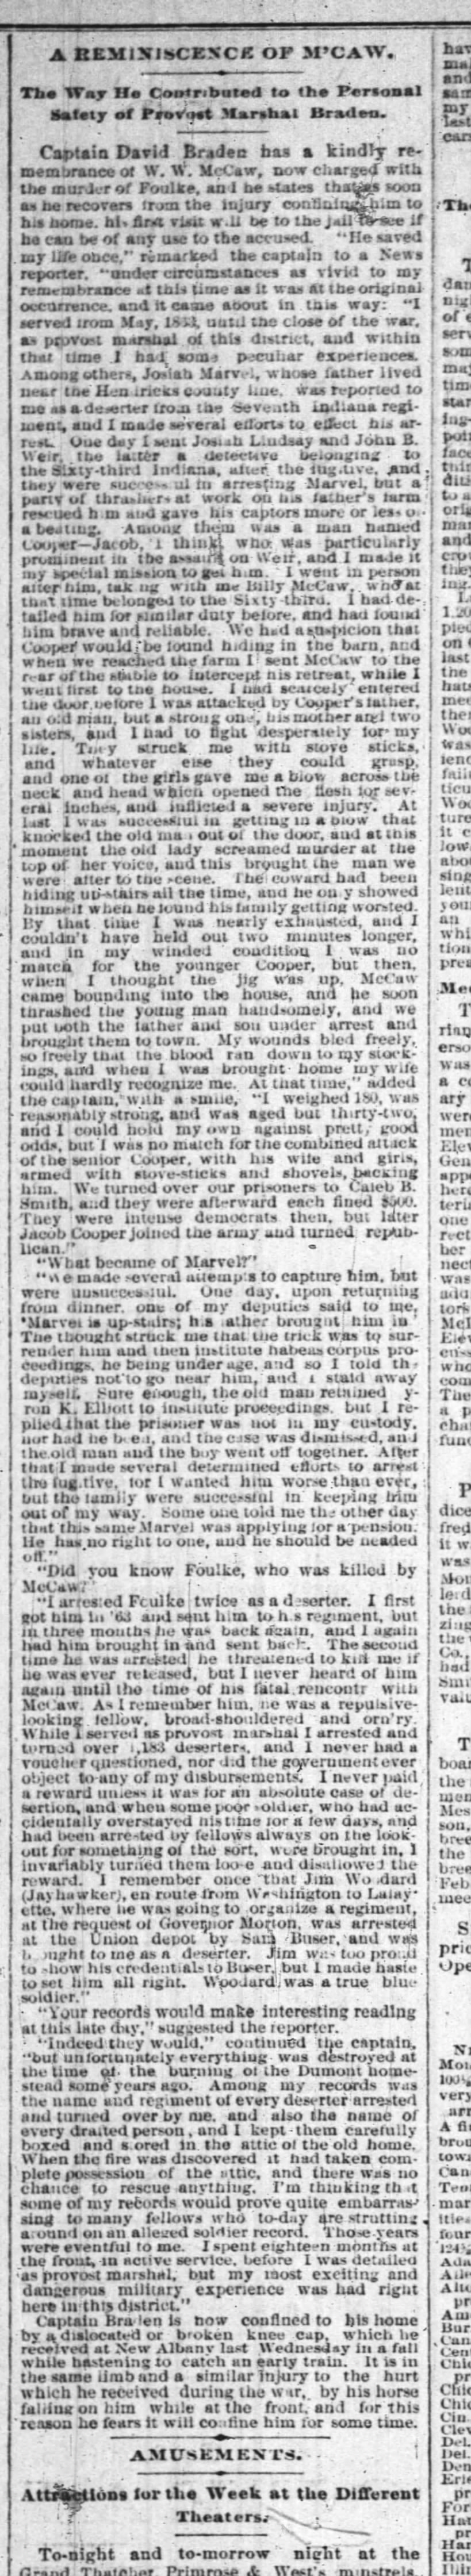 Reminiscence of M'Caw - Josiah Marvel & Robert Marvel 
Indianapolish News Dec. 13, 1886